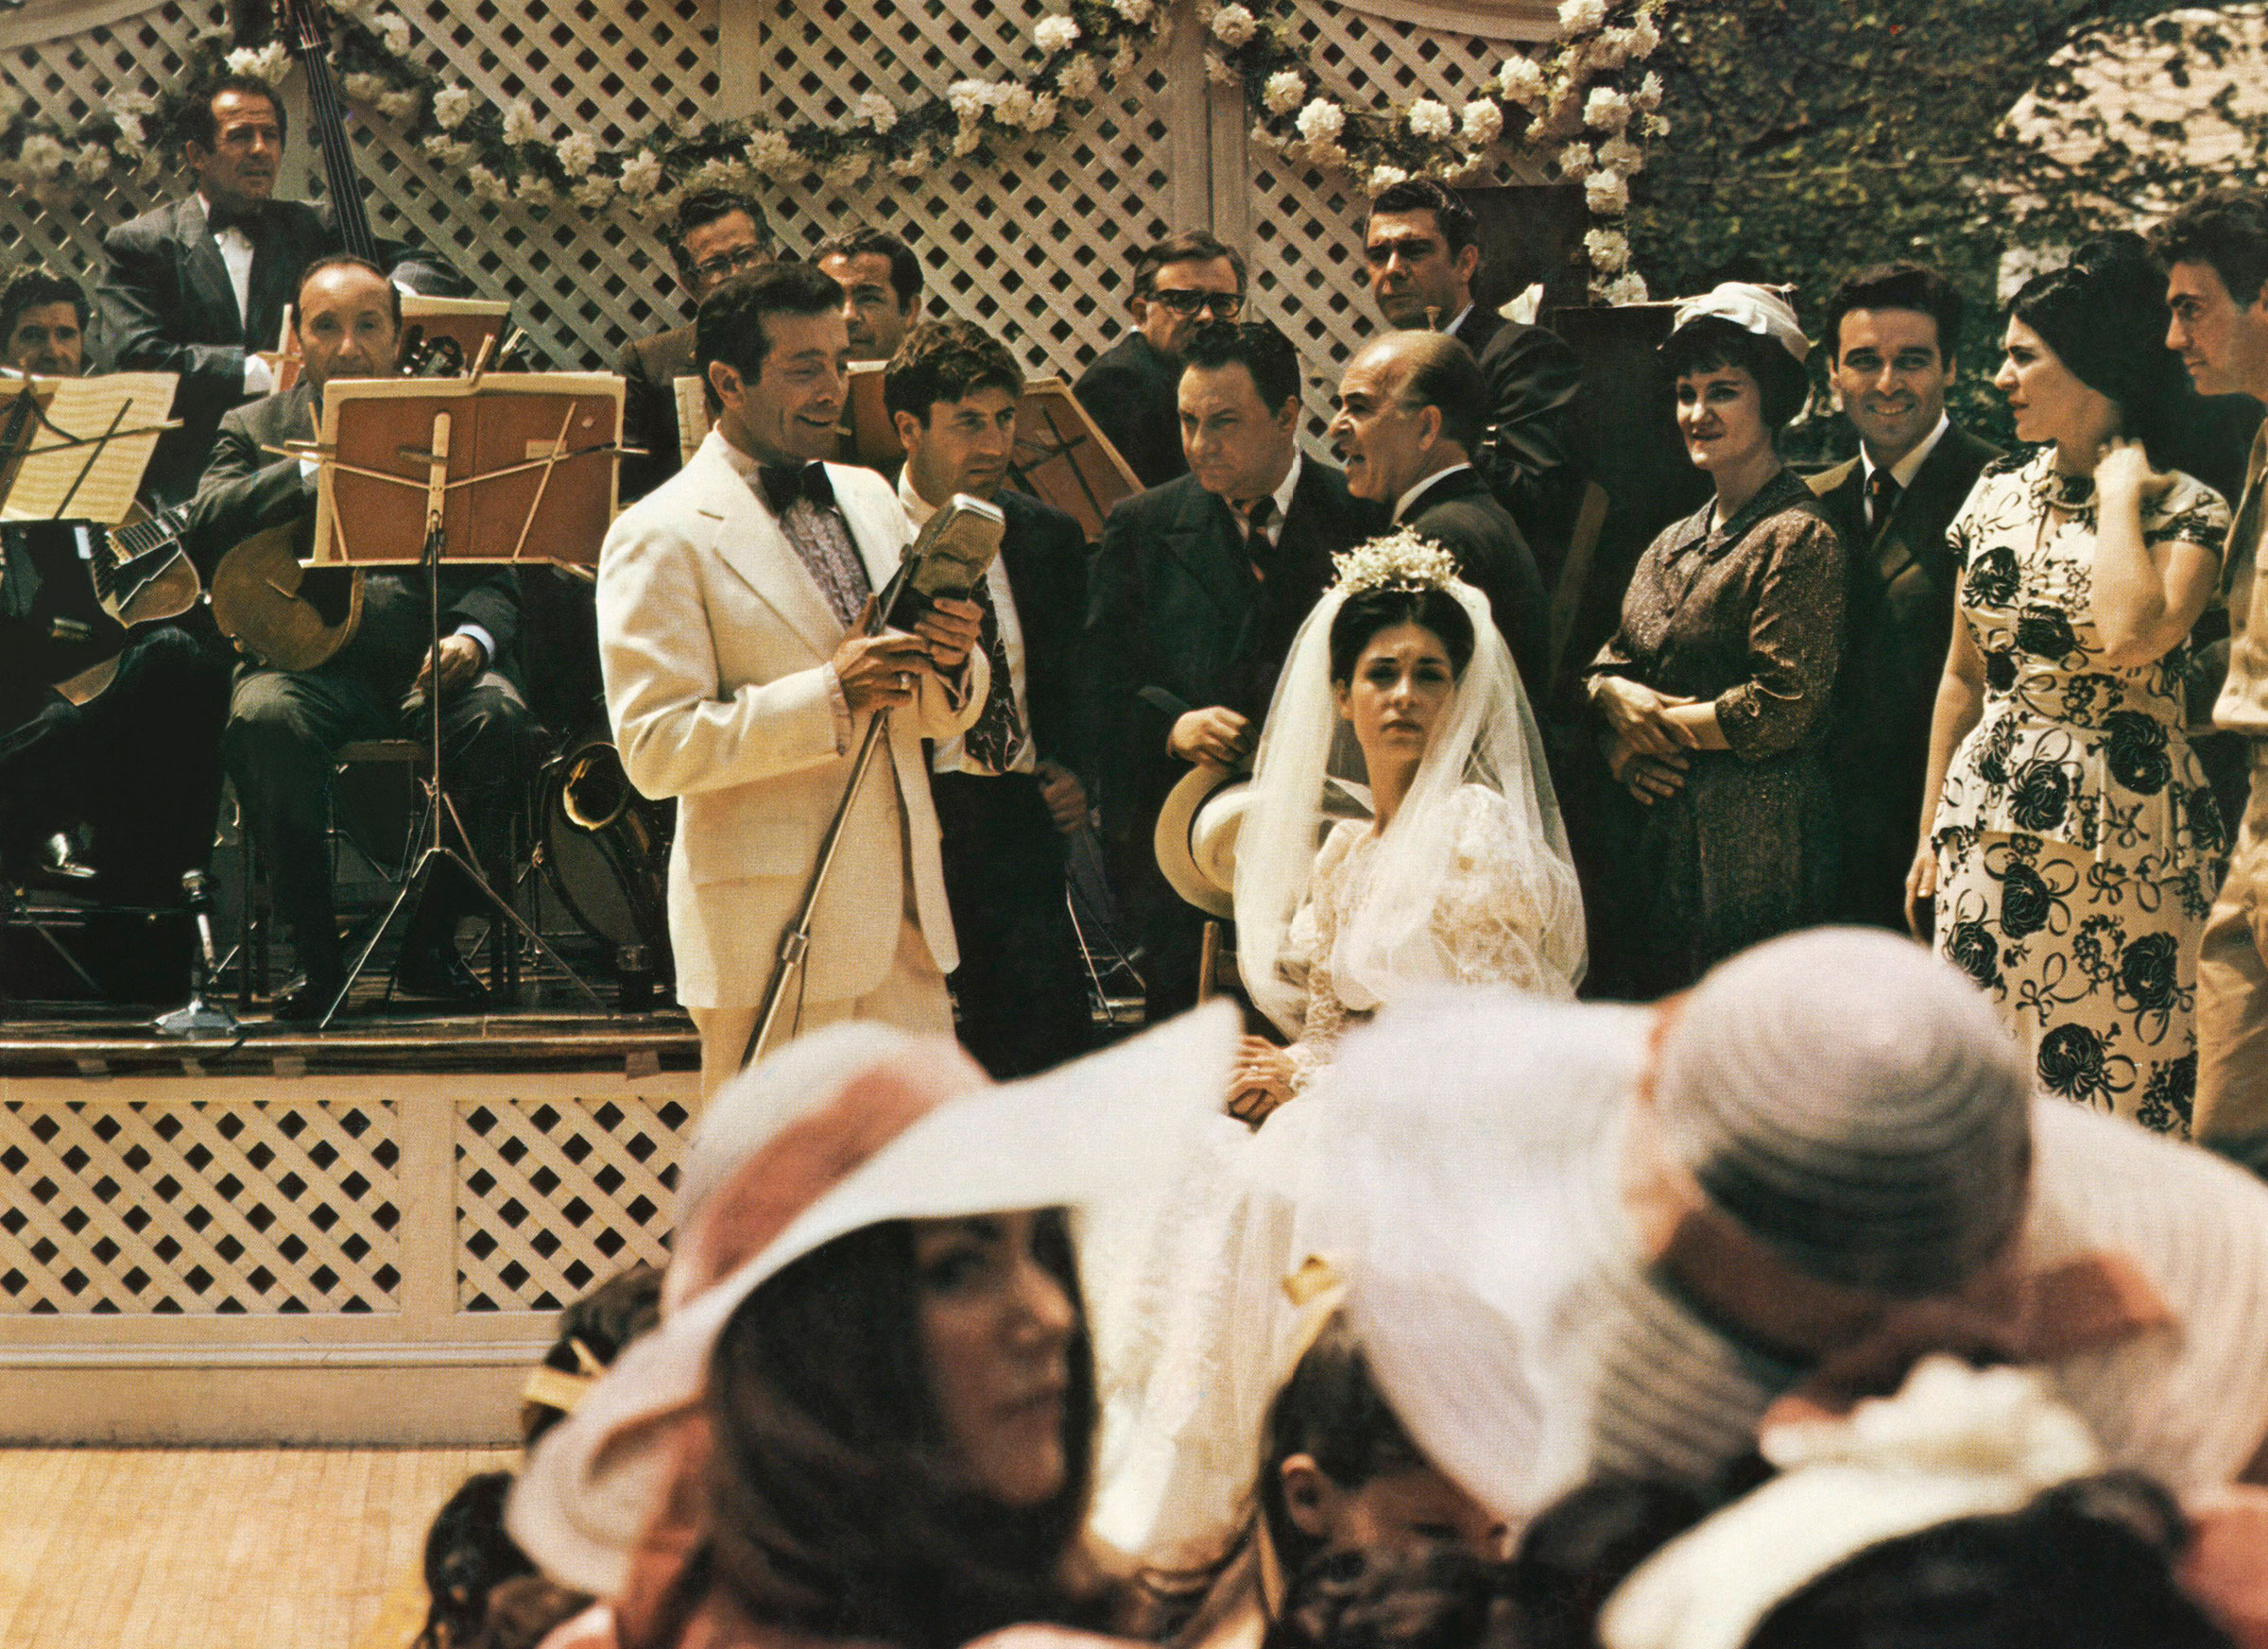 THE GODFATHER, Al Martino (microphone), Talia Shire (wedding dress), 1972